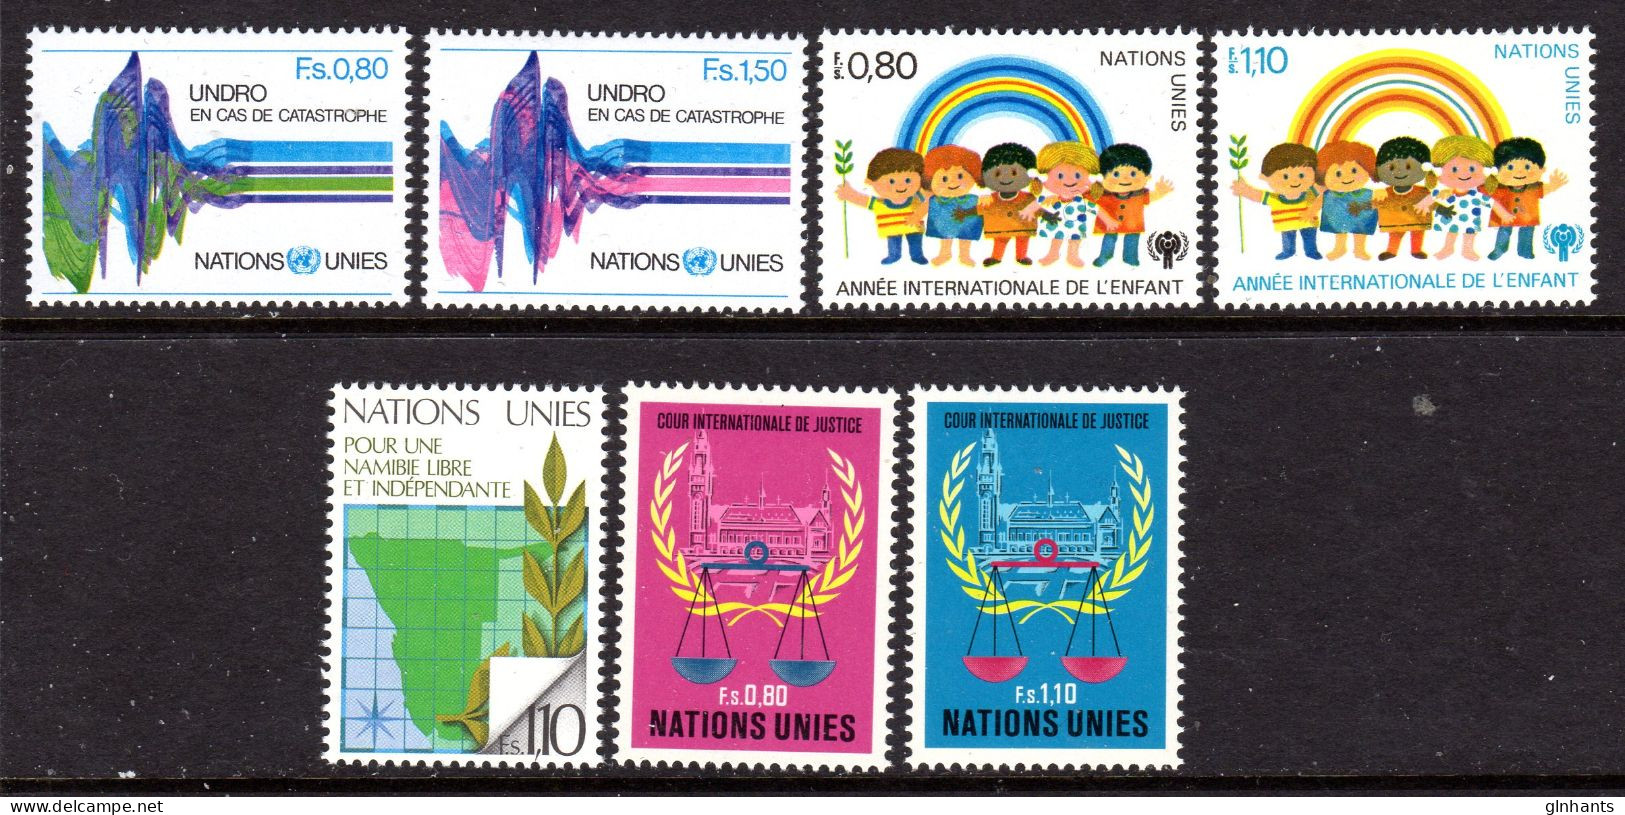 UNITED NATIONS UN GENEVA - 1979 COMPLETE YEAR SET (7V) AS PICTURED FINE MNH ** SG G82-G88 - Ungebraucht